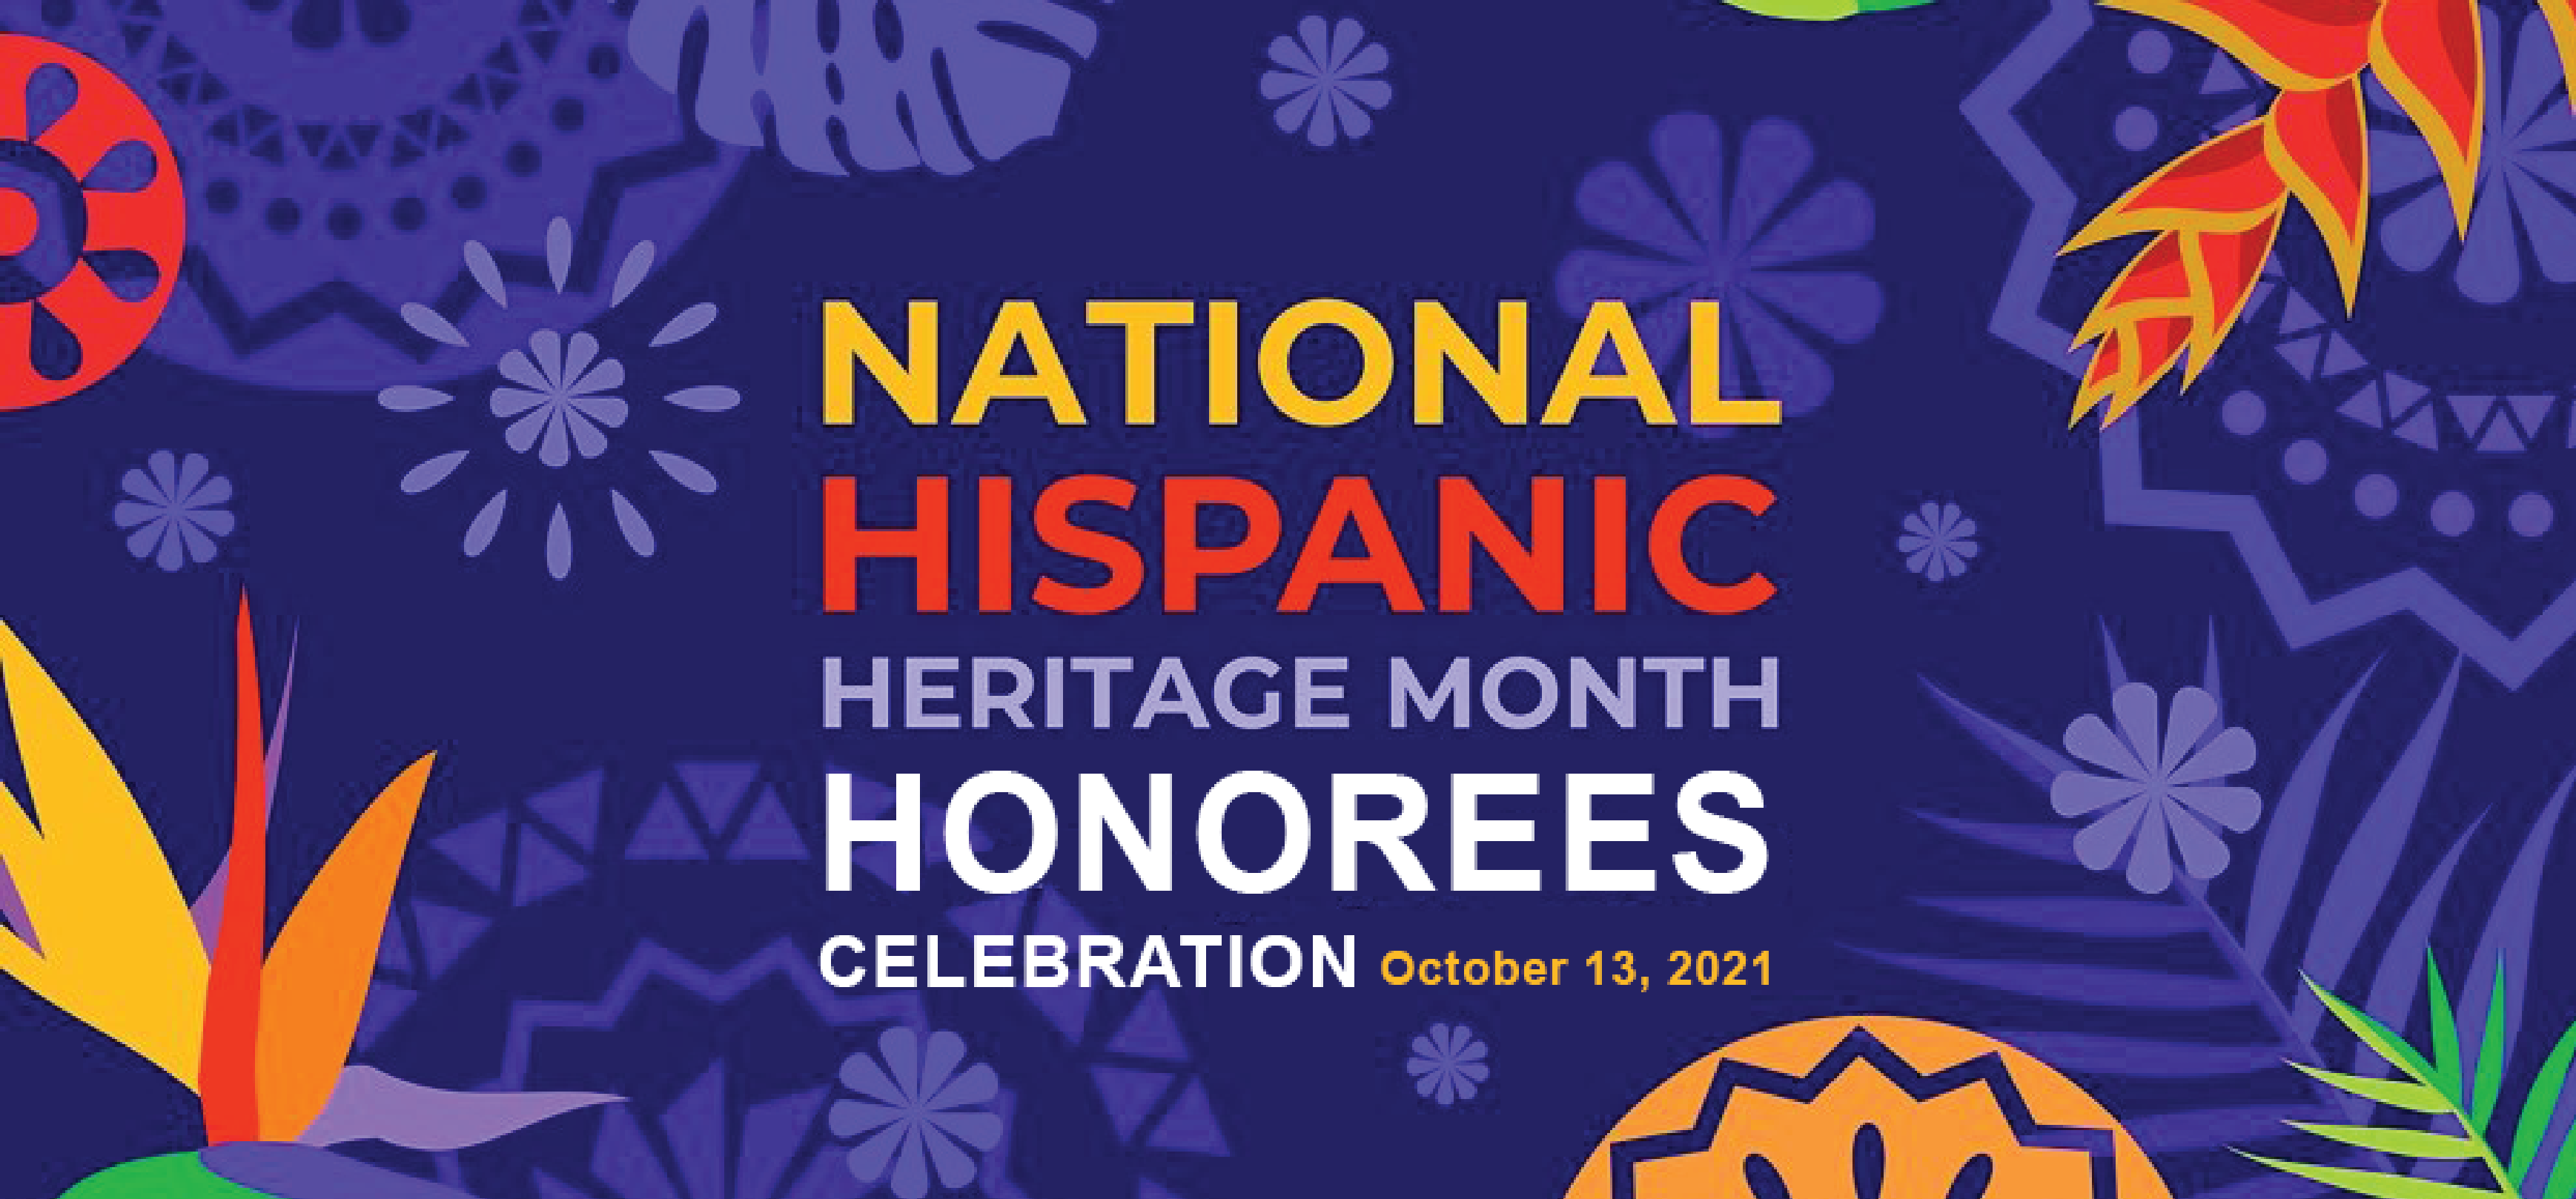 Celebration of Hispanic Heritage Month Honorees 